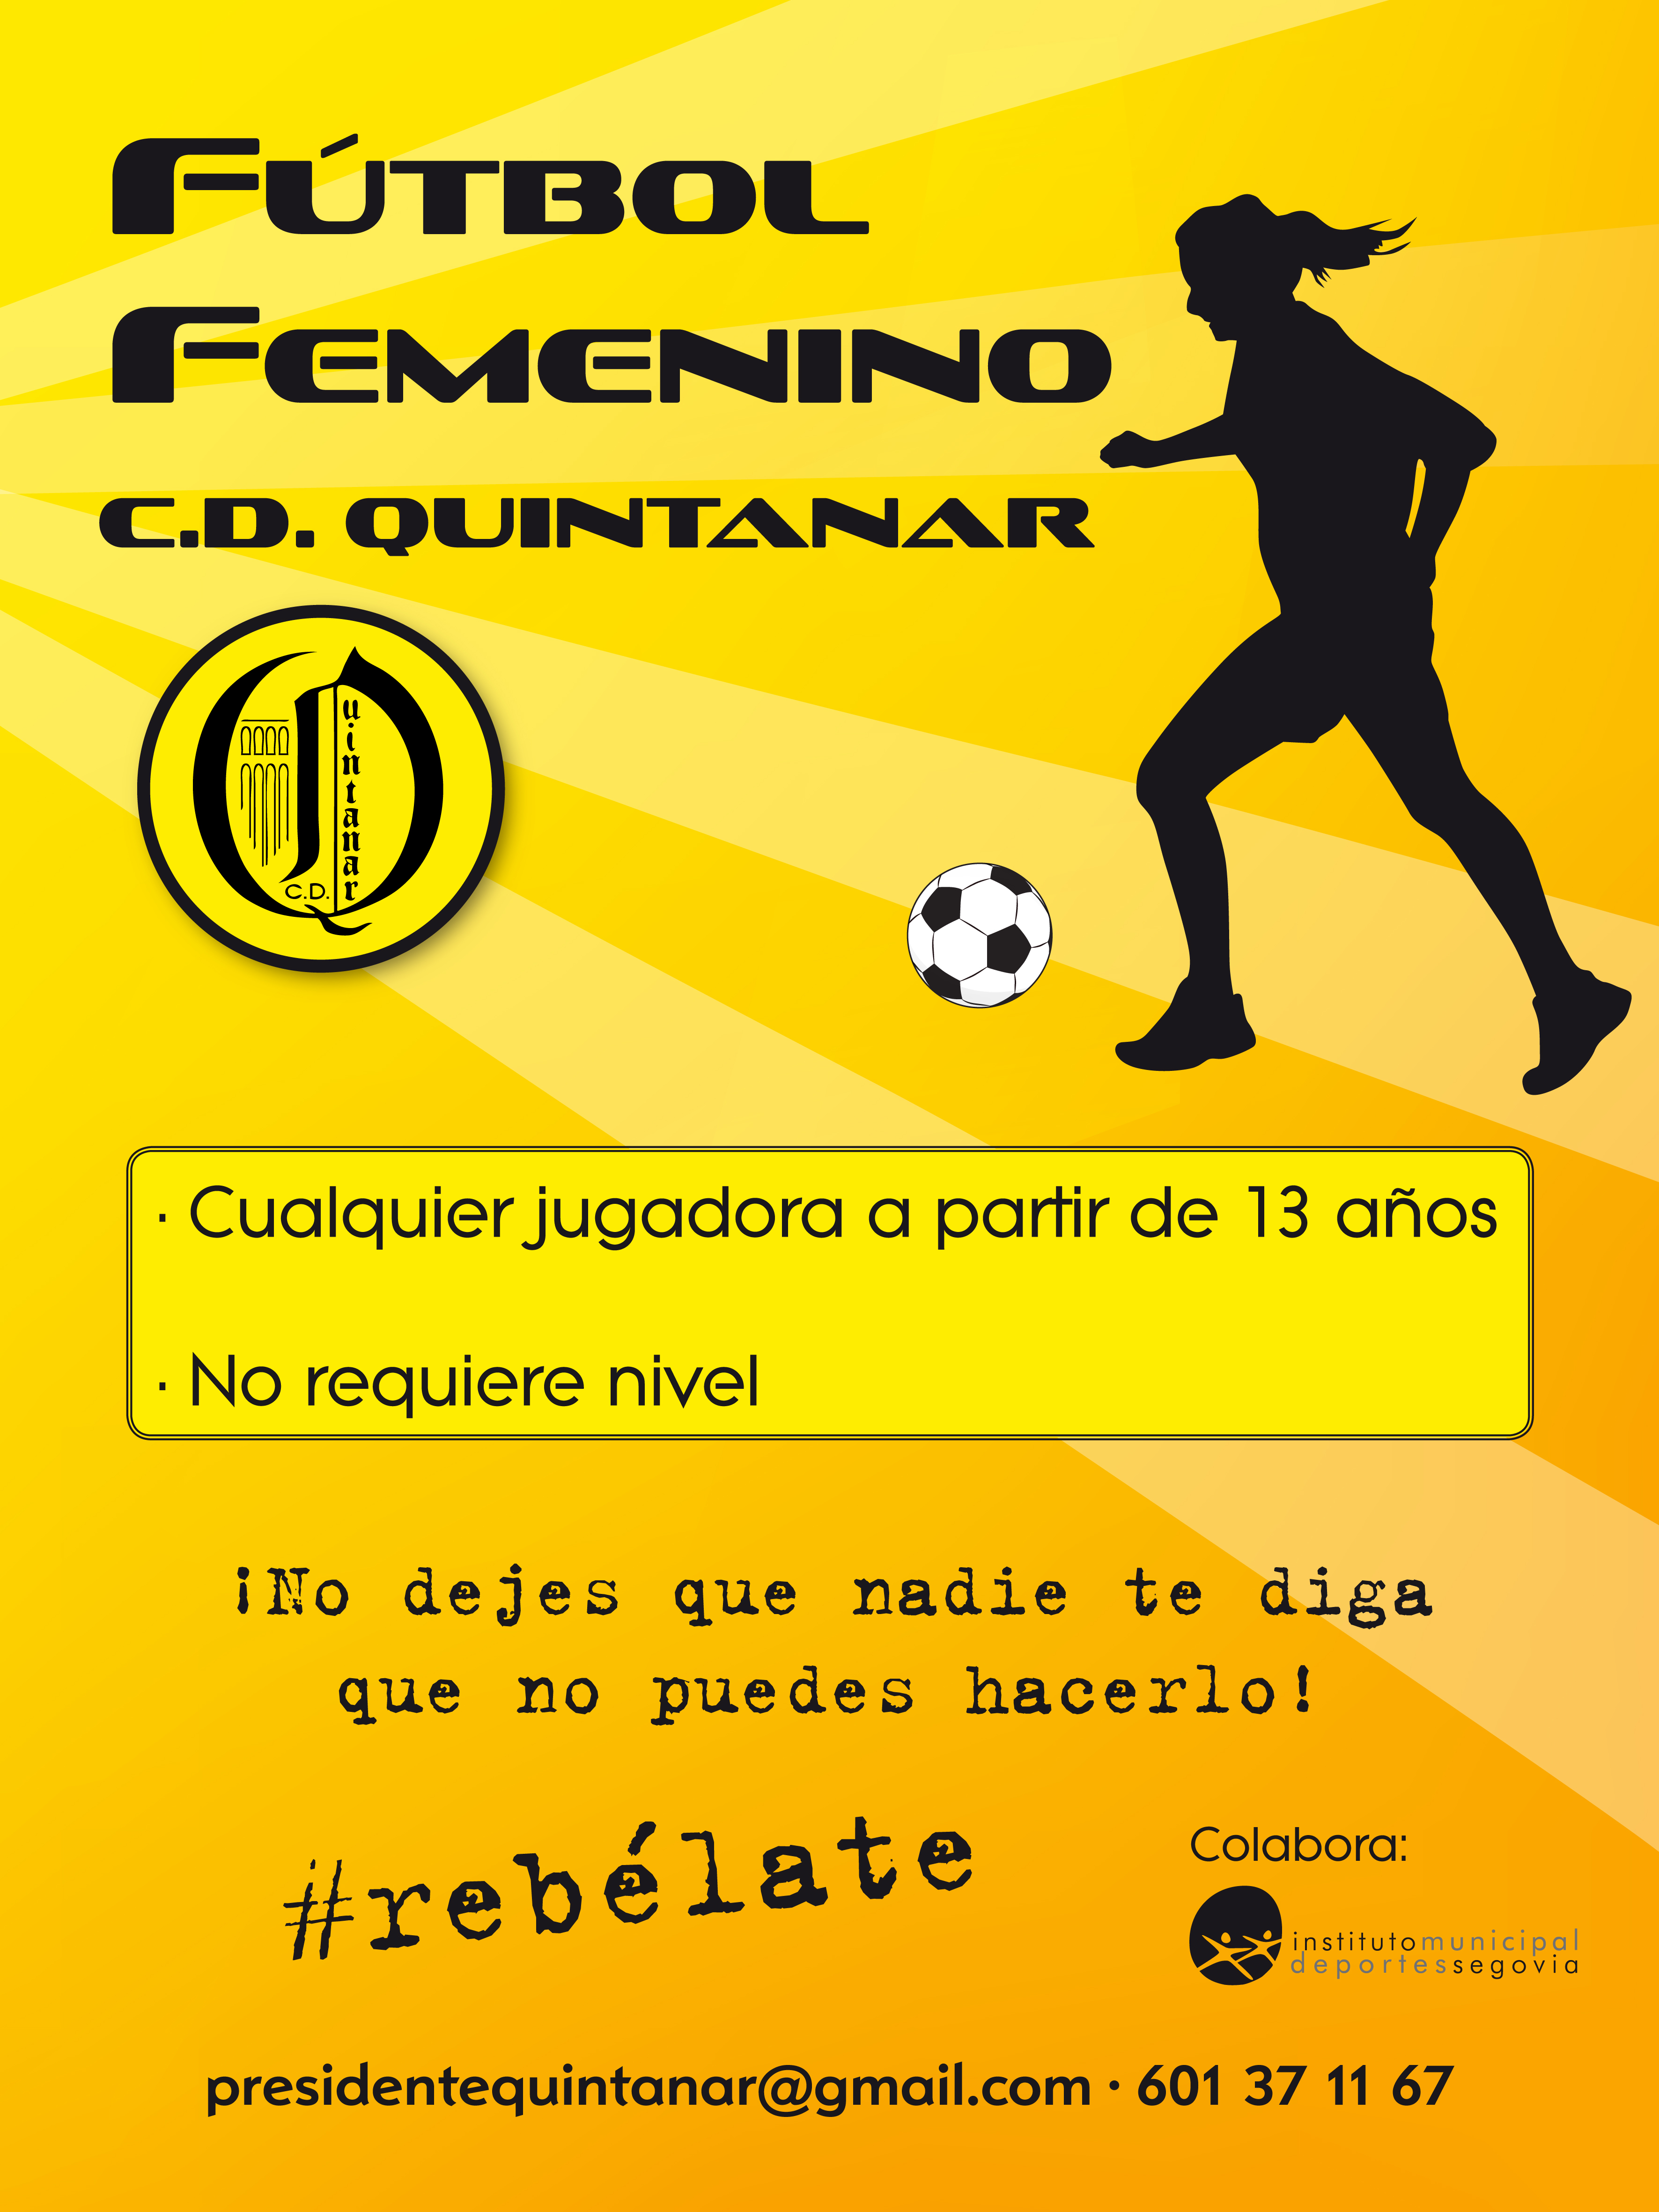 C.D. Quintanar: Fútbol Femenino